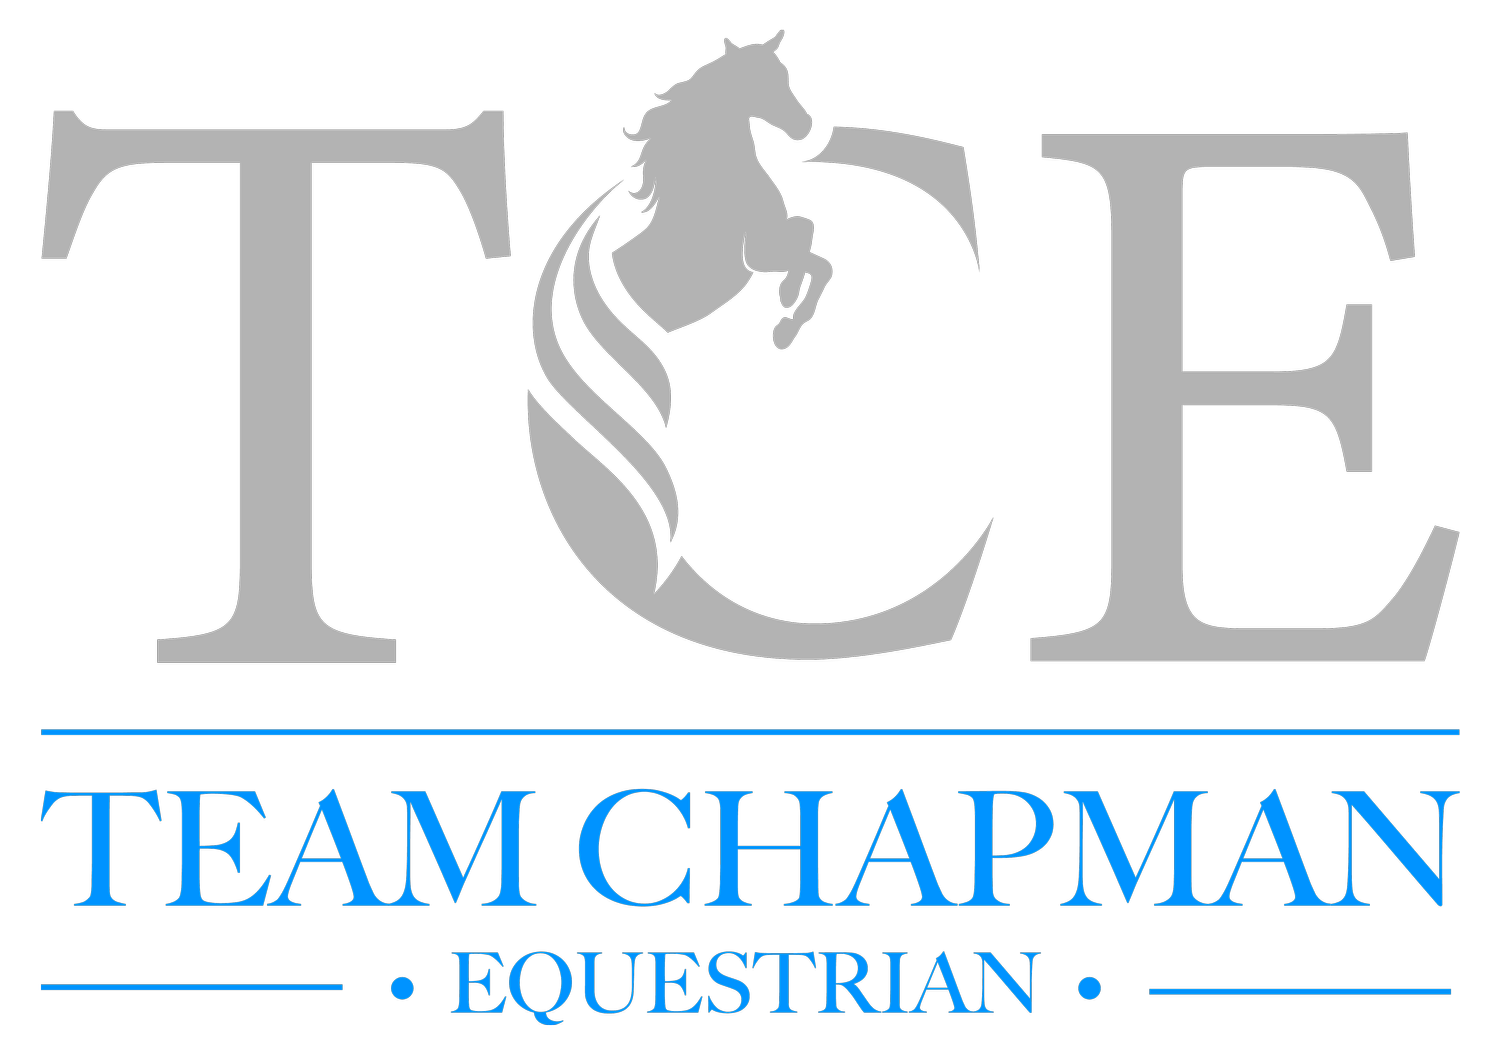 Team Chapman equestrian